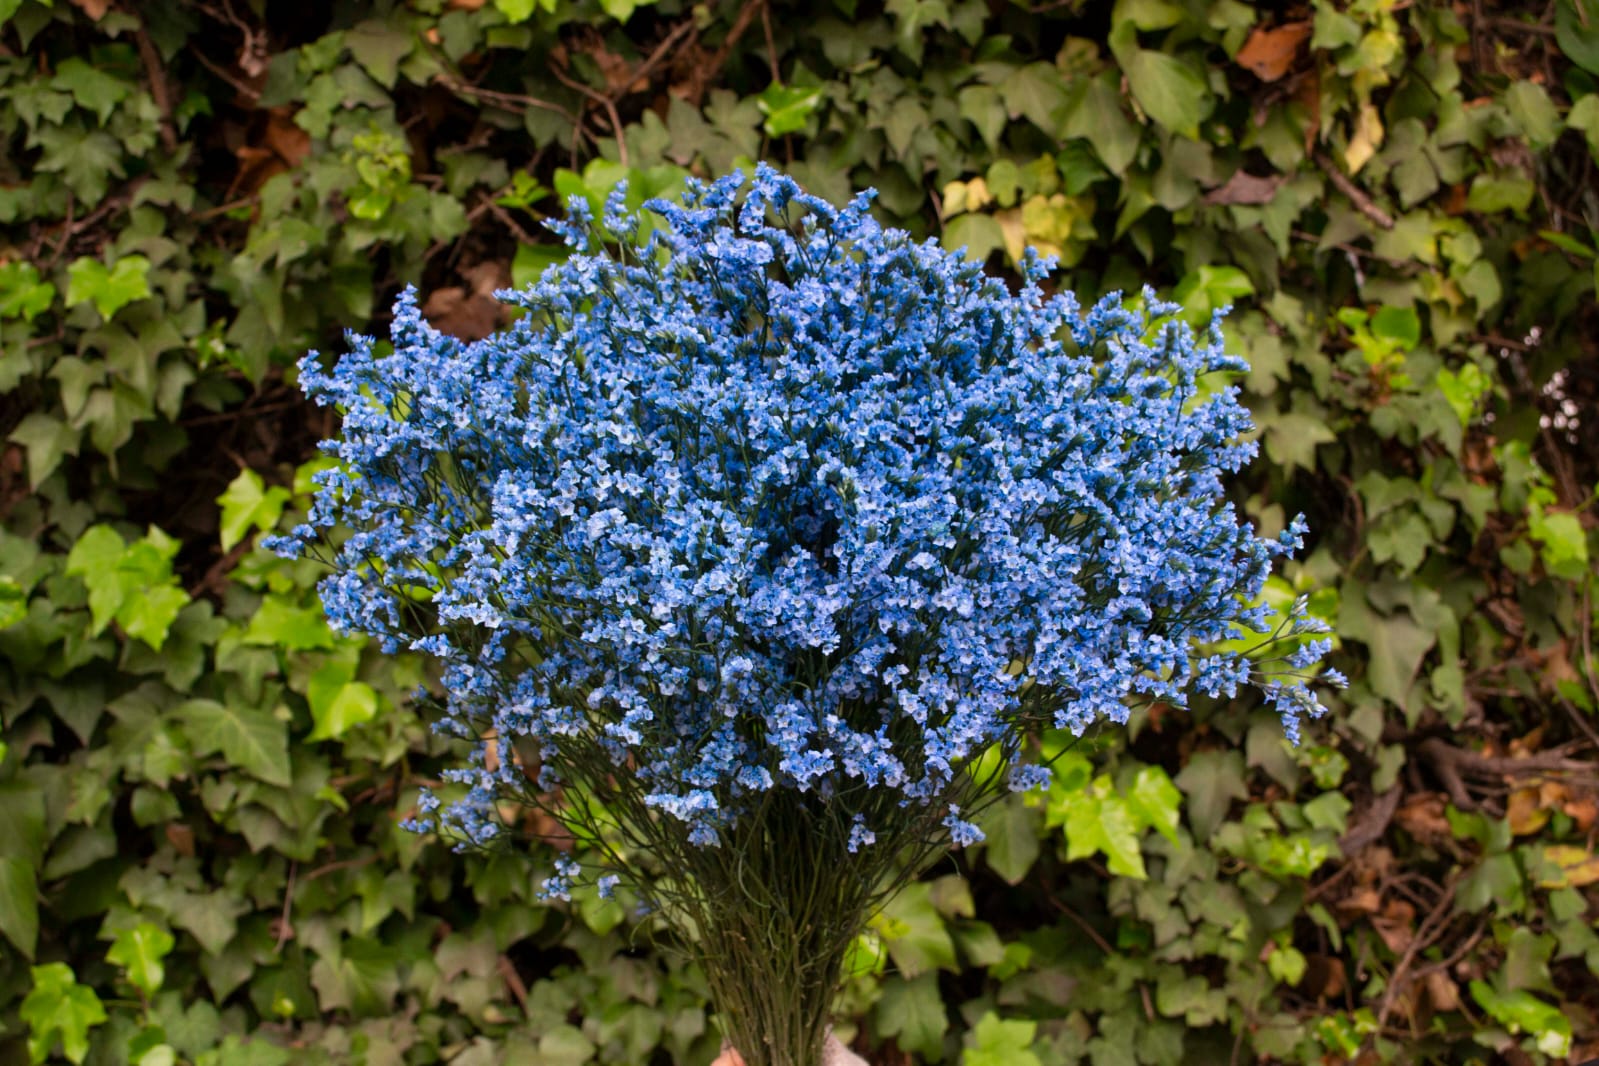 Limonium sinensis light blue